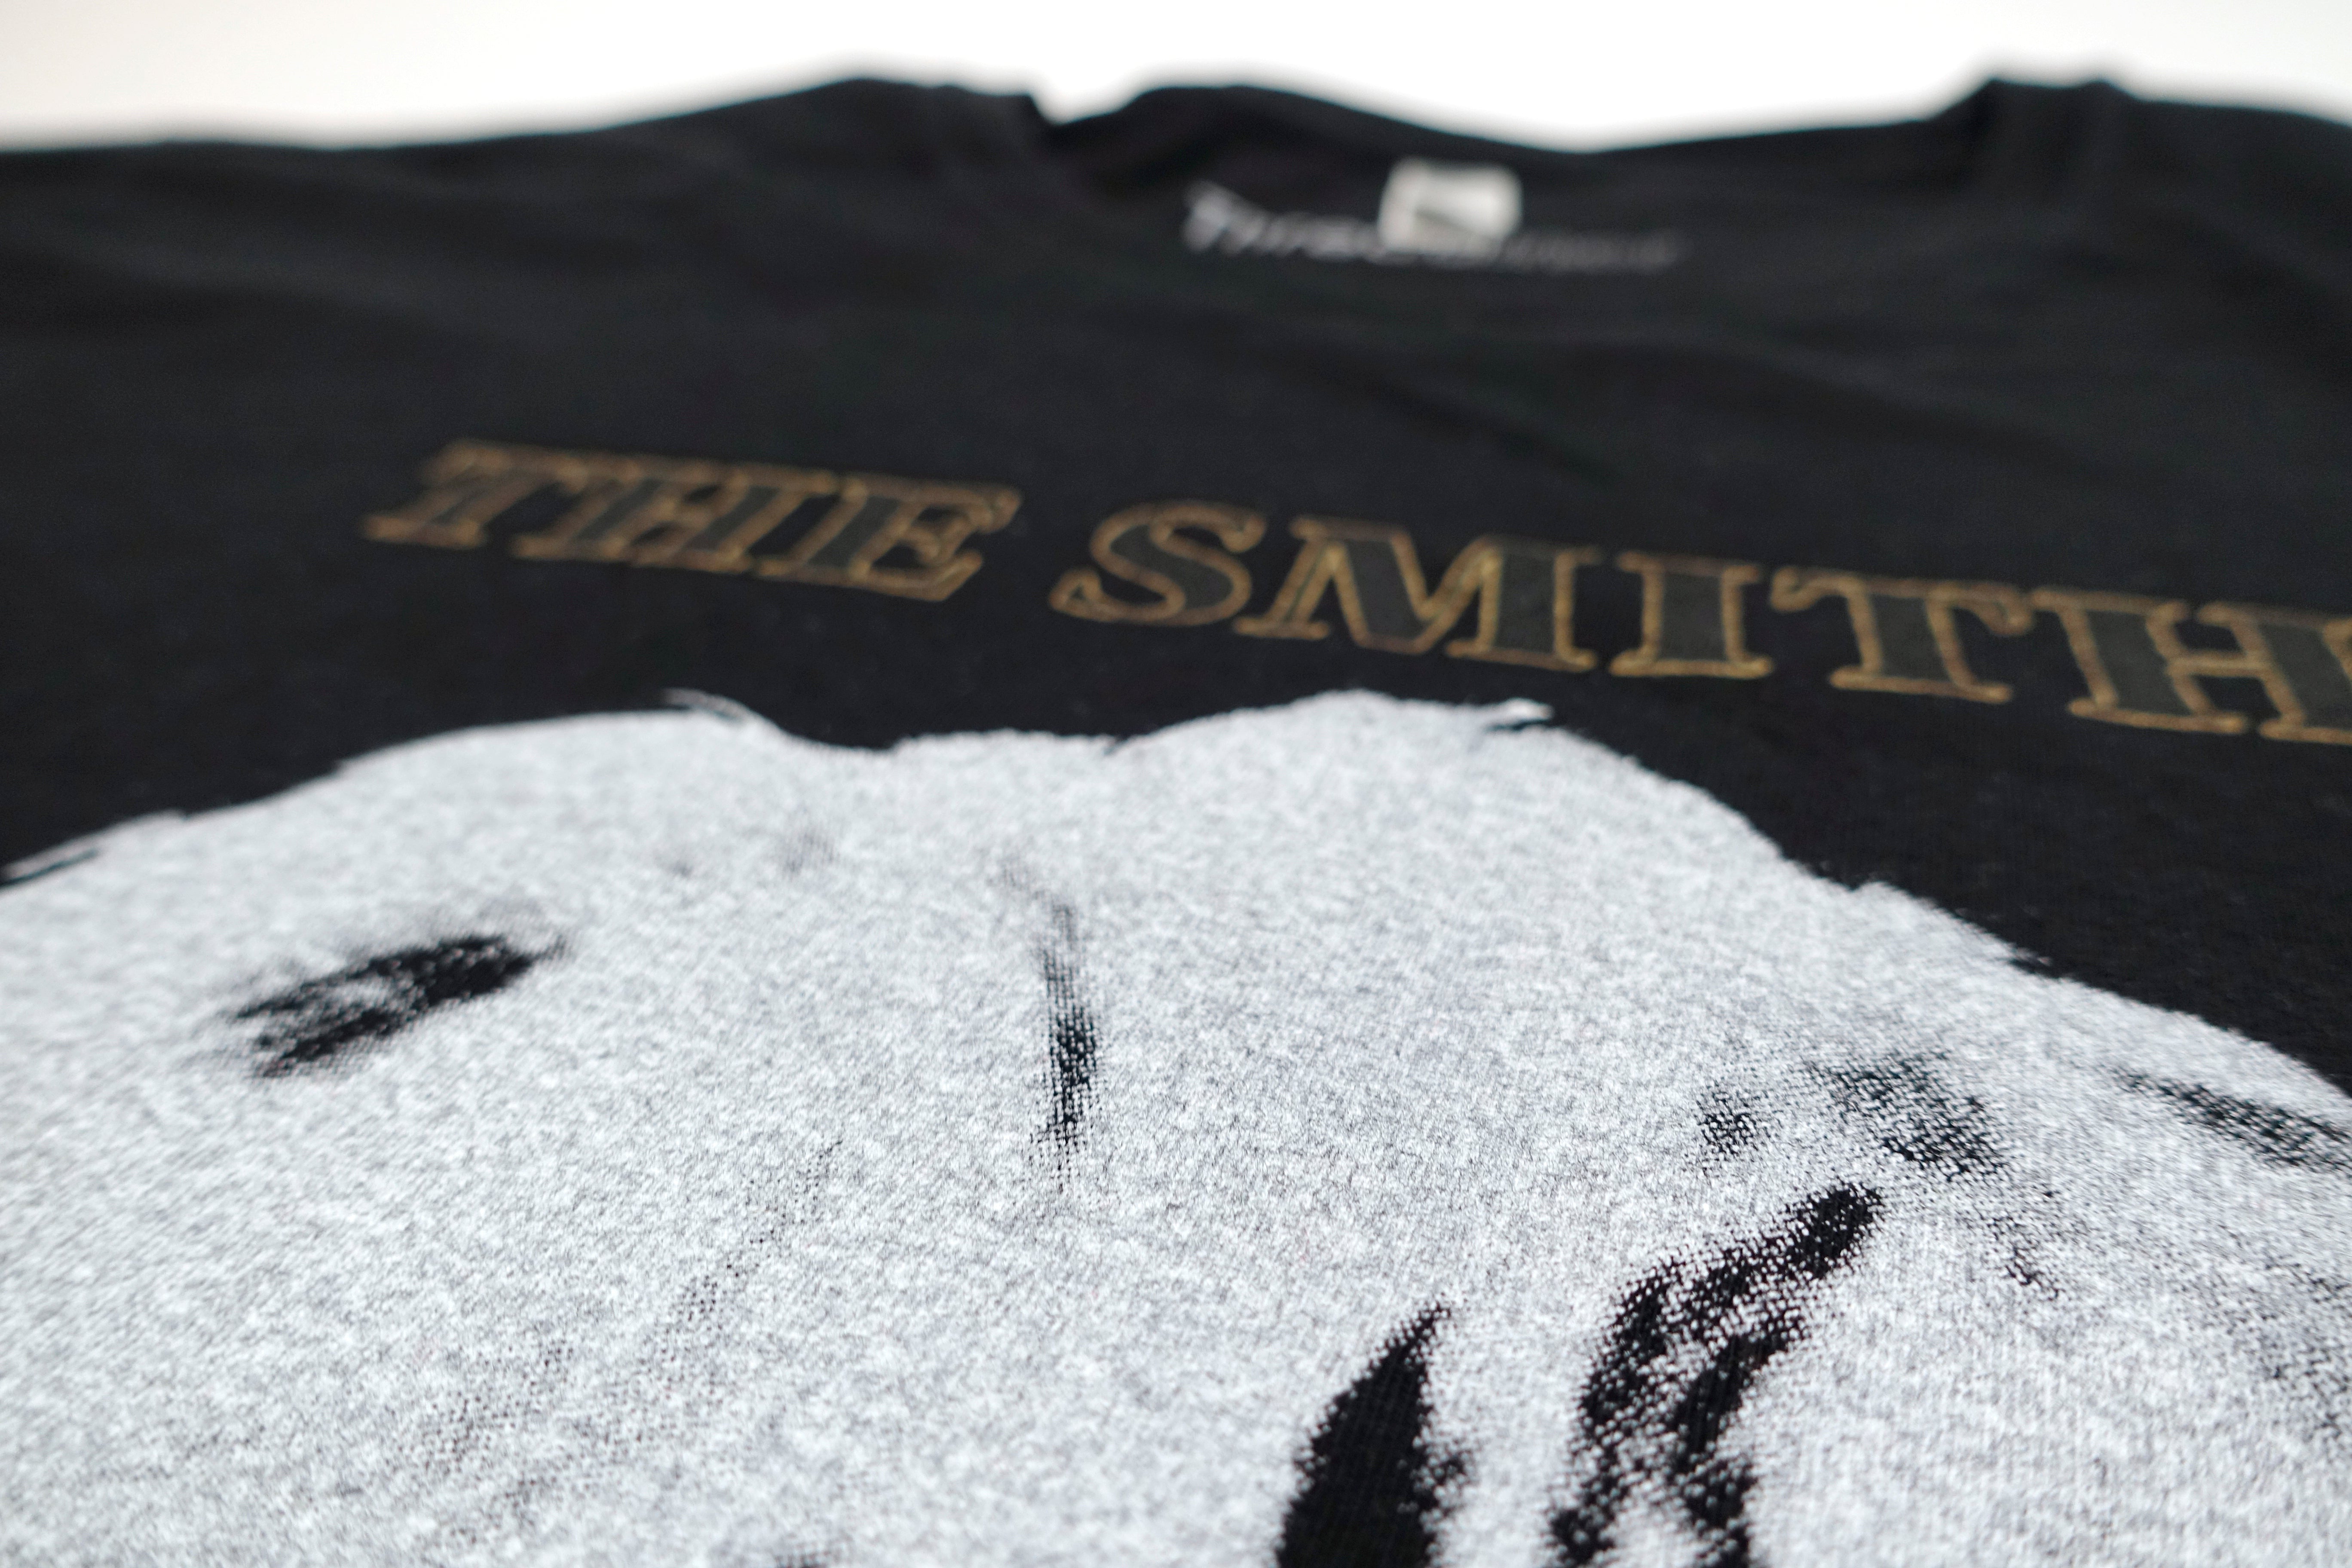 the Smiths - Shelia Take a Bow Black Shirt (Bootleg by Me) Size Large